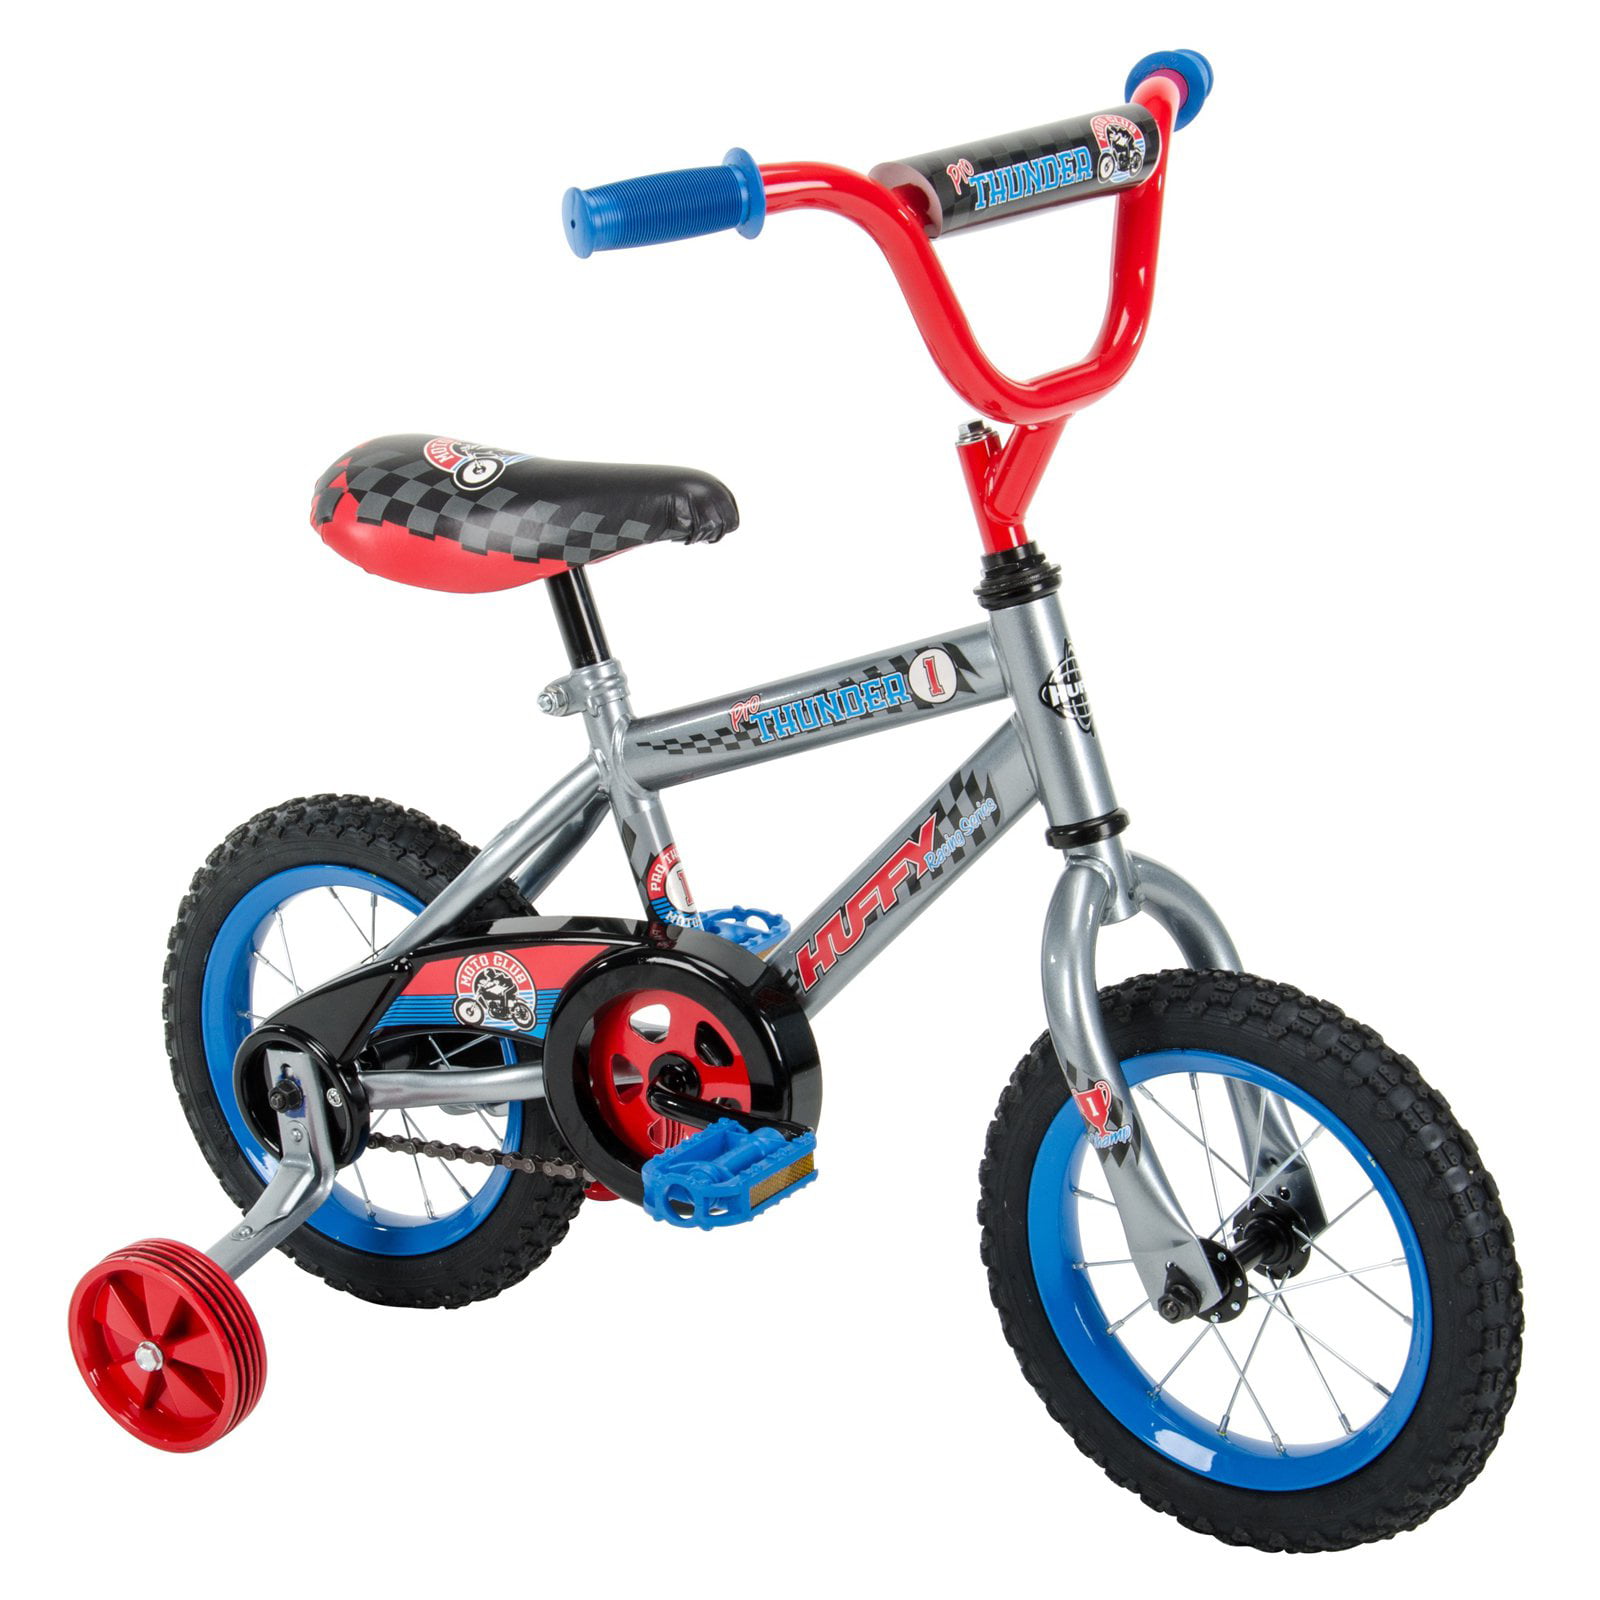 open Box Huffy 12" Pro Thunder Kid Balance Bike With Coaster Brakes Orange for sale online 